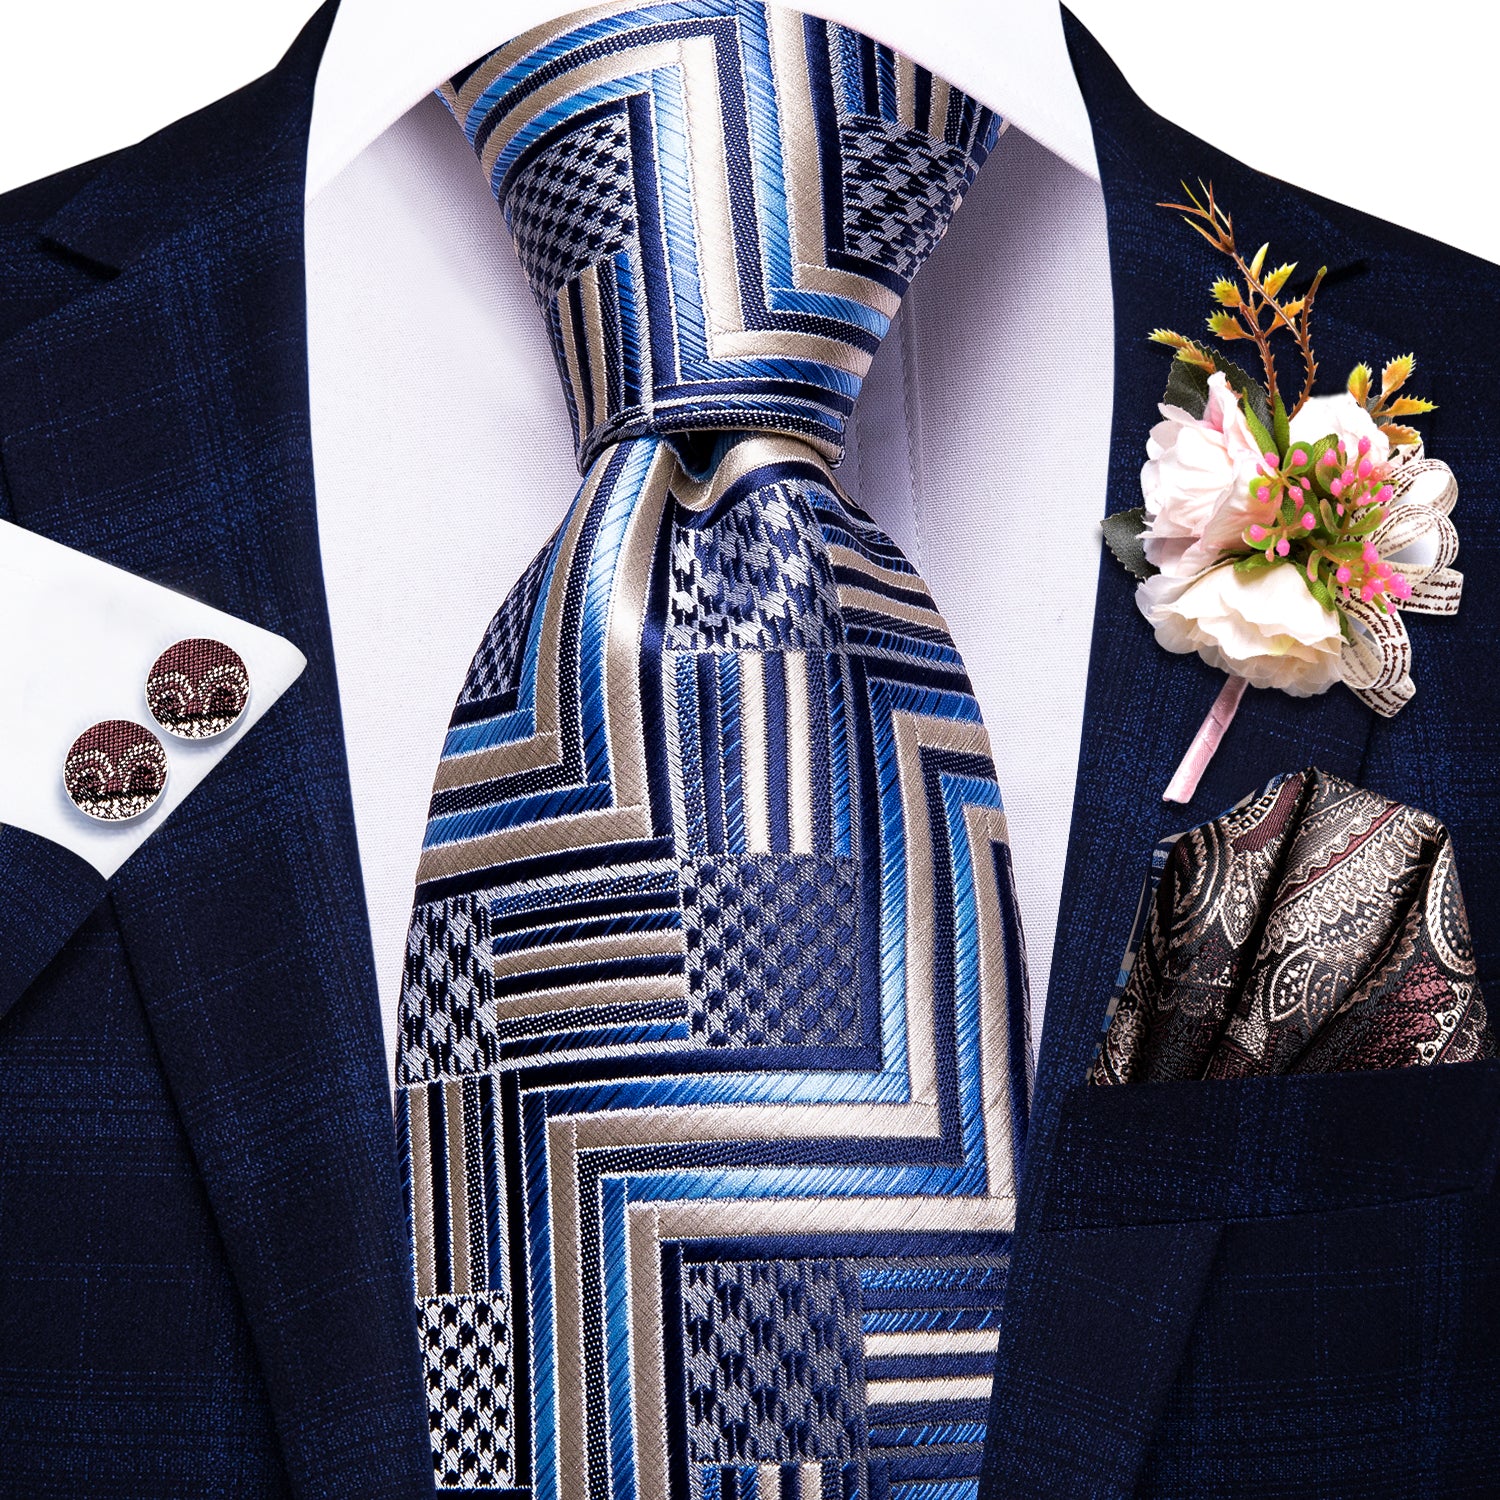 Khaki Blue Plaid Tie Pocket Square Cufflinks Set with Wedding Brooch